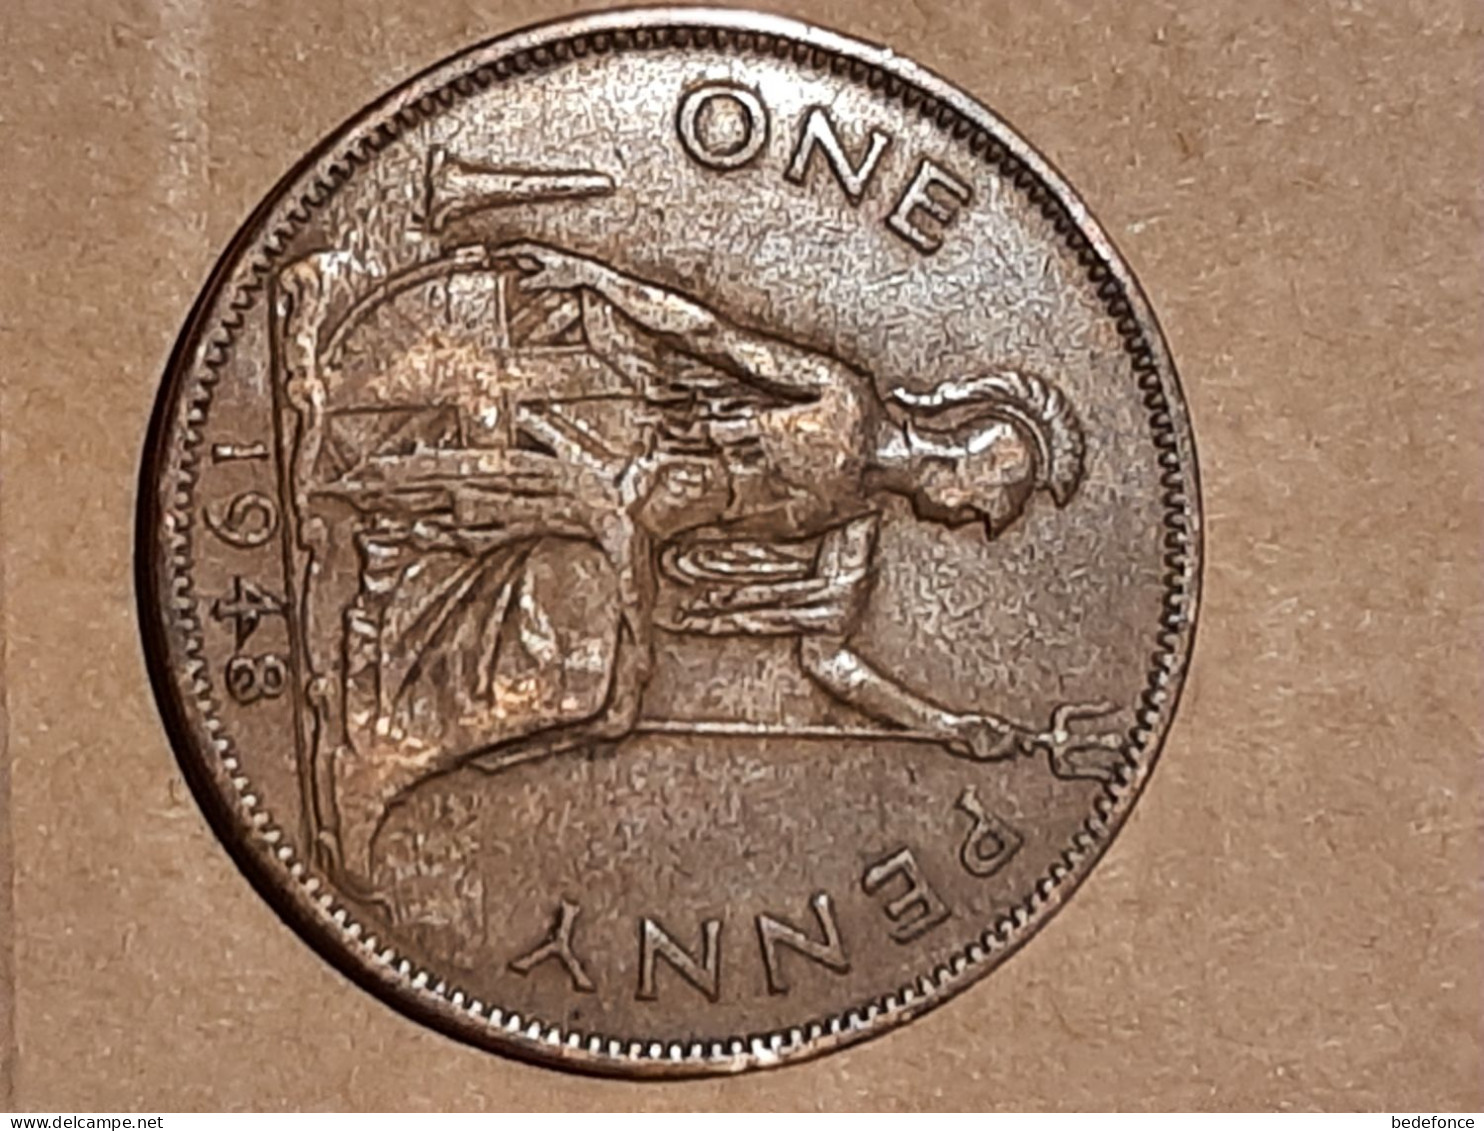 Monnaie - Grande-Bretagne - One Penny 1948 - Georges VI - D. 1 Penny